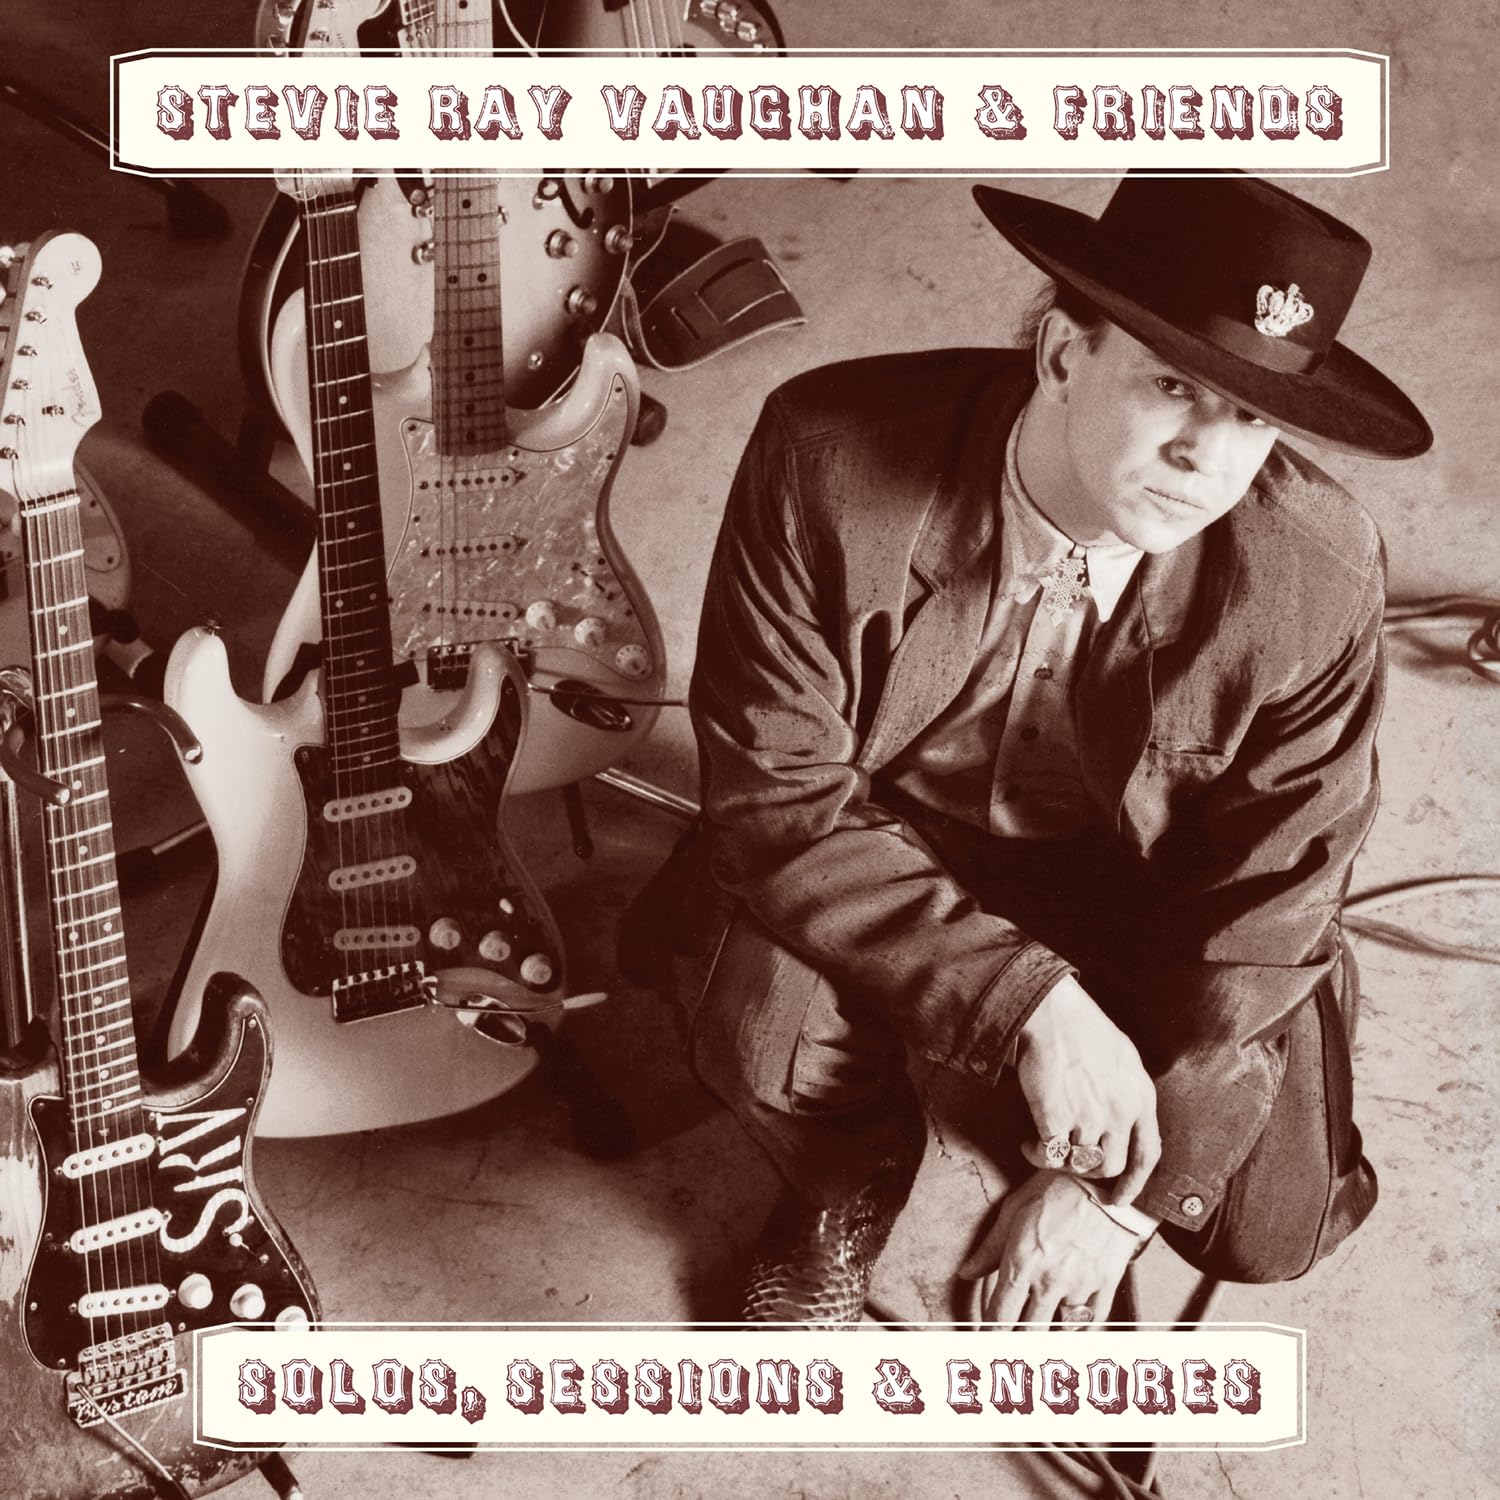 Stevie Ray Vaughan Solos, Sessions & Encores (Translucent Blue) (2LP)